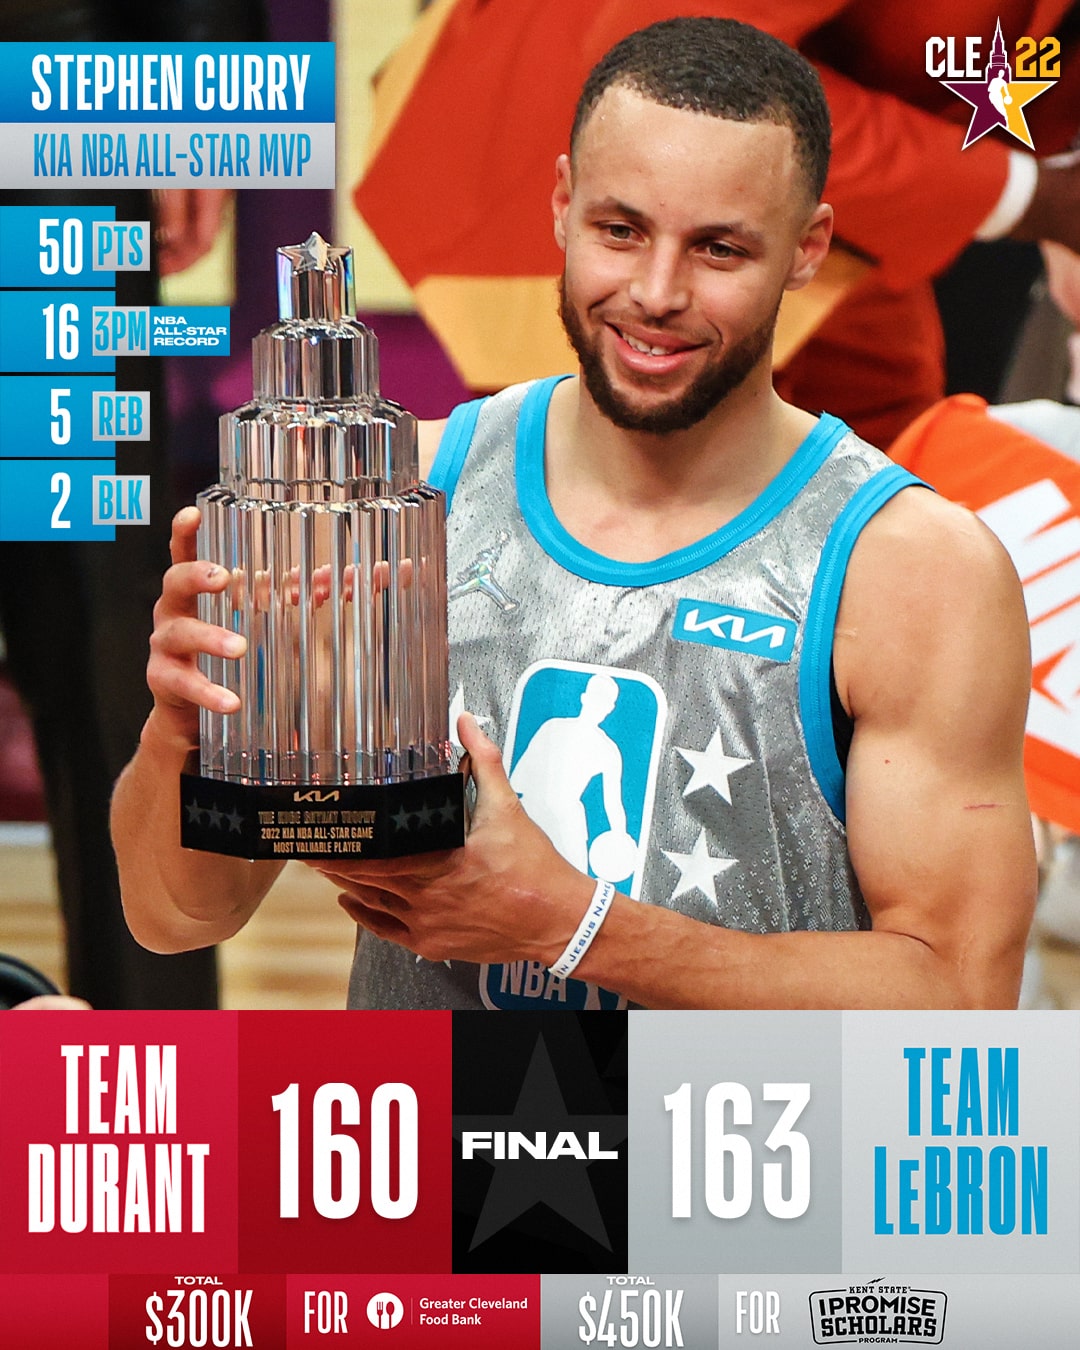 Steph Curry wins 2022 NBA All-star MVP